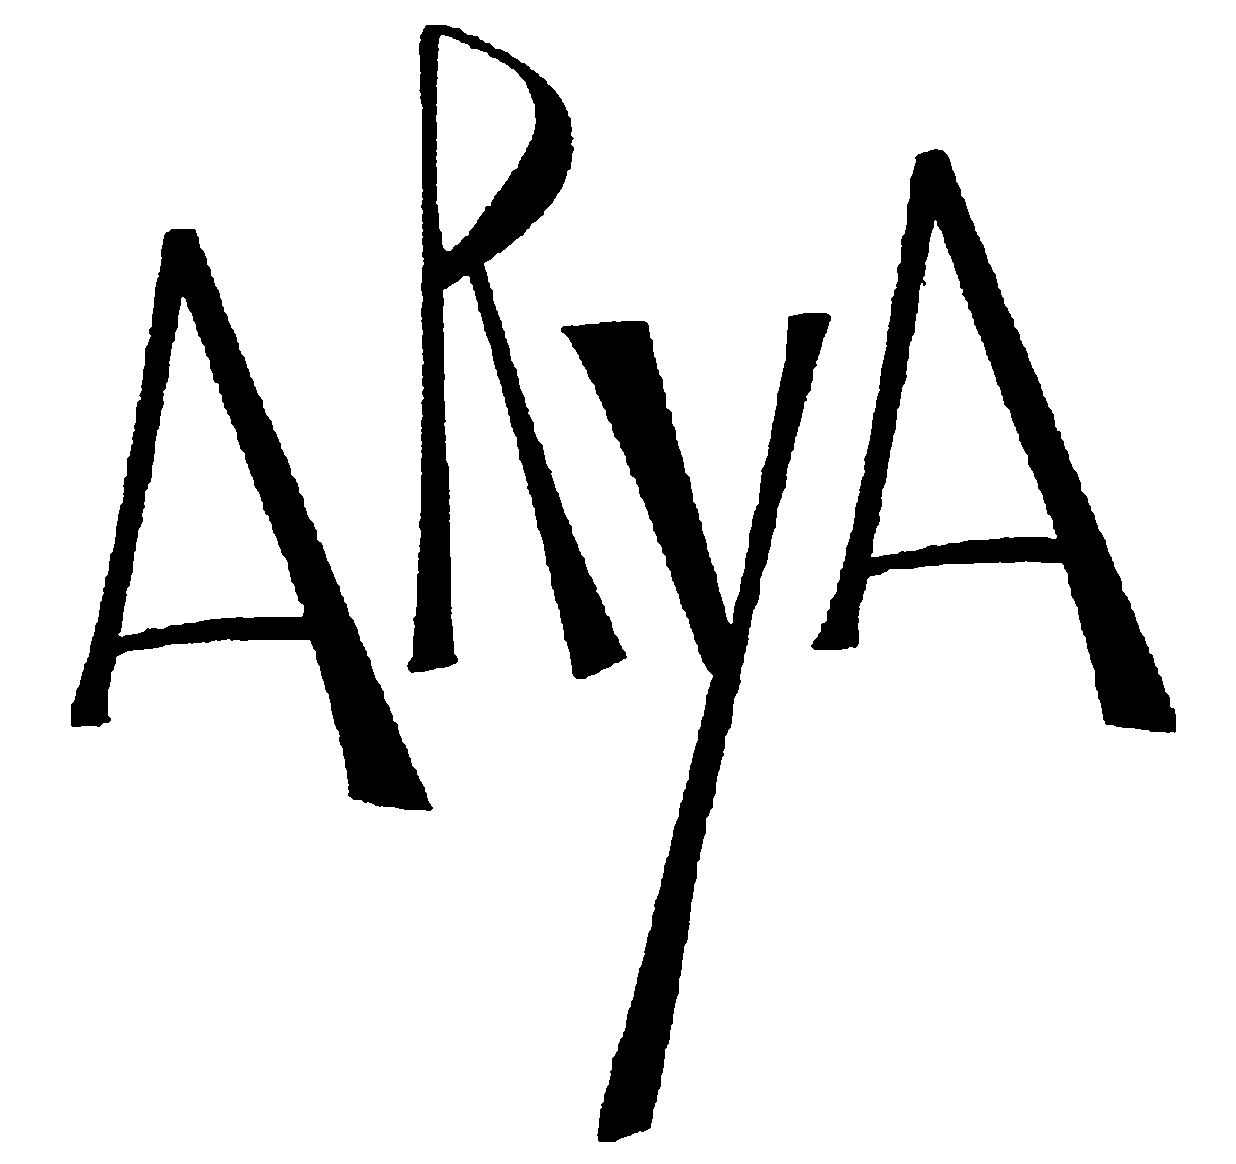 Trademark Logo ARYA